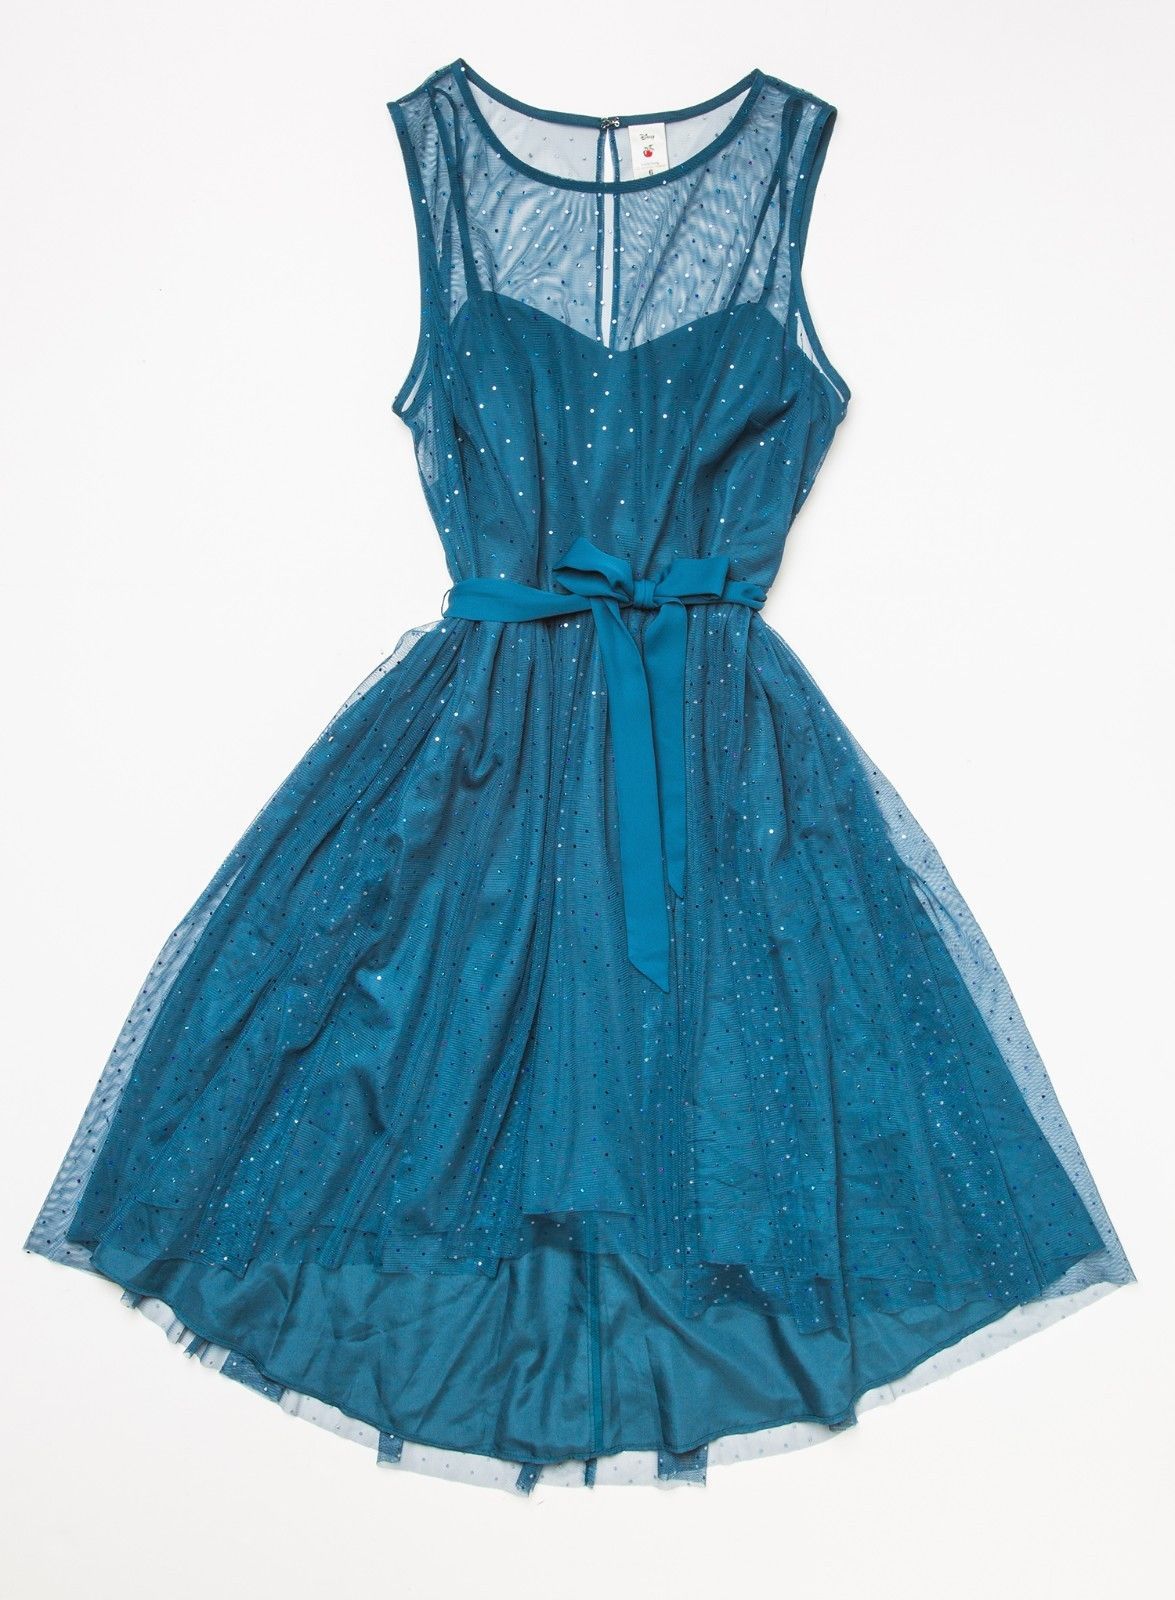 lauren conrad blue dress